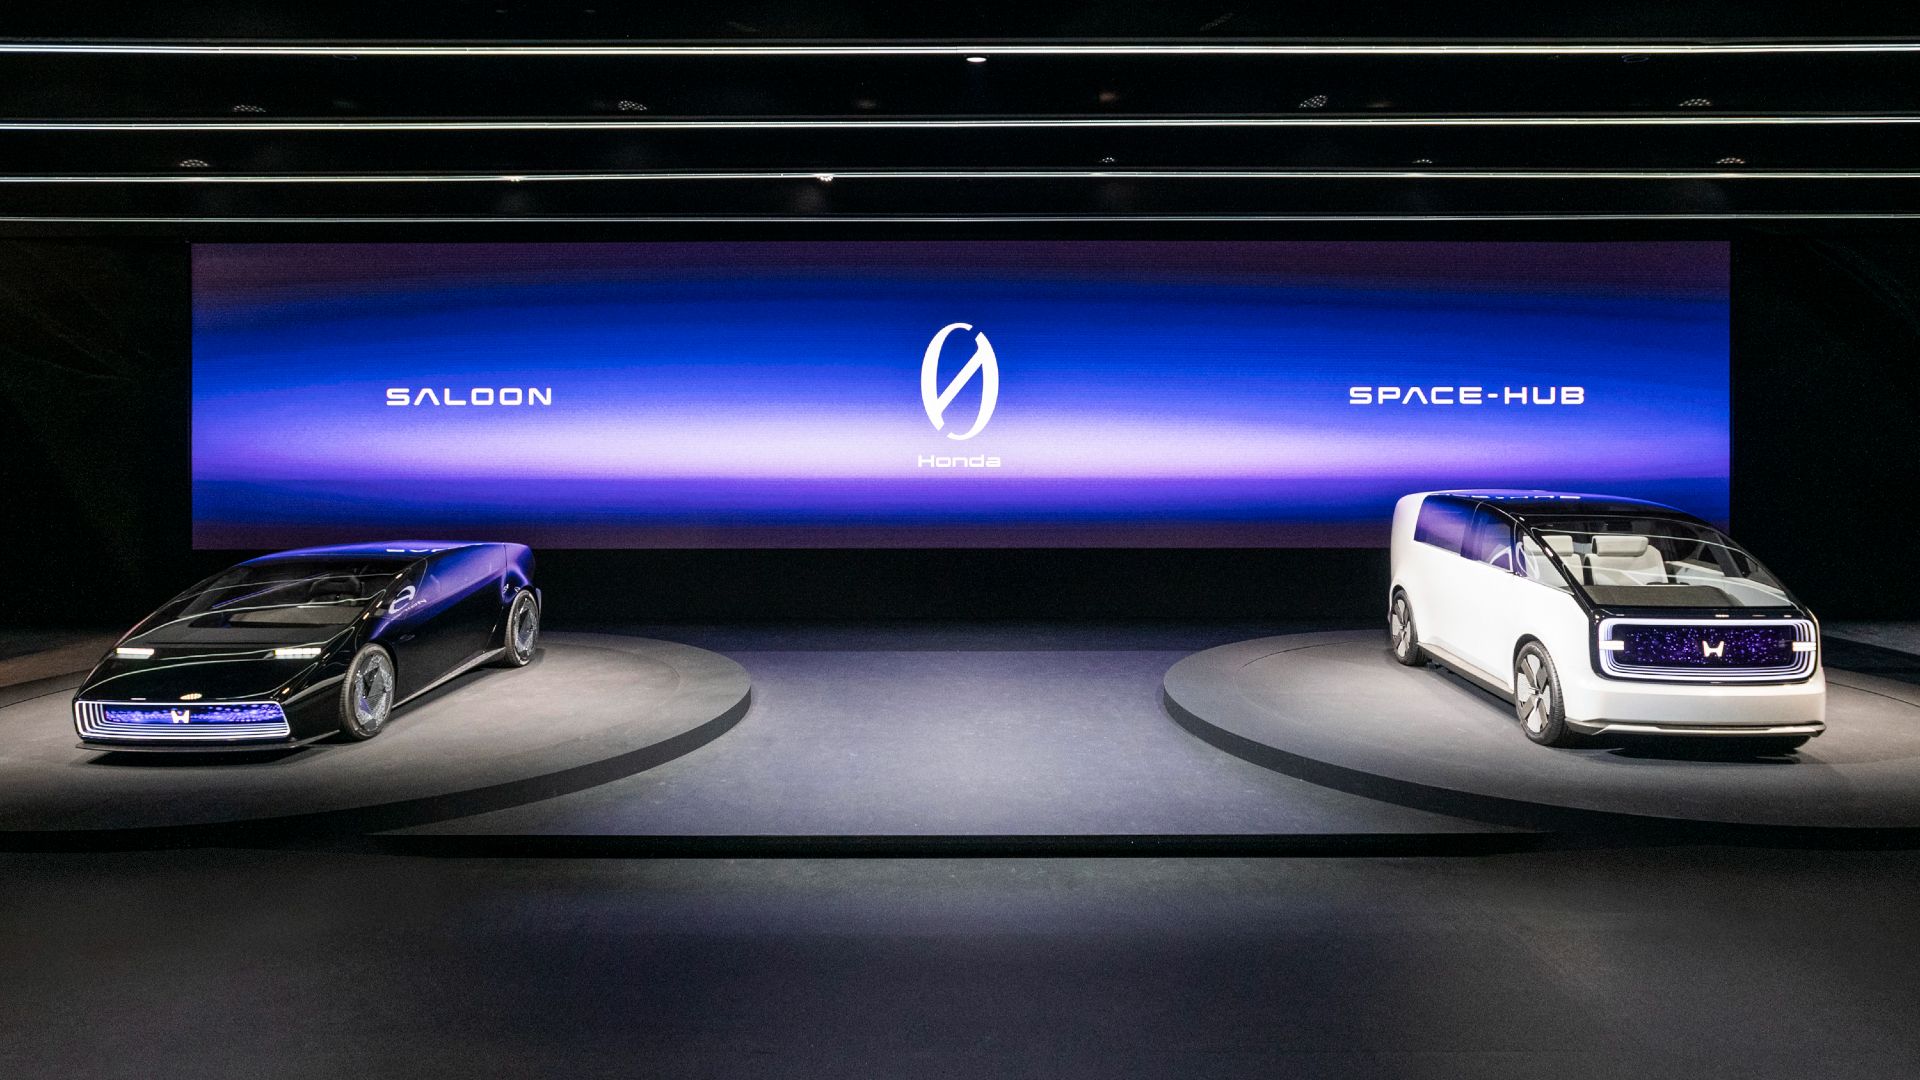 Honda Saloon and Space-Hub